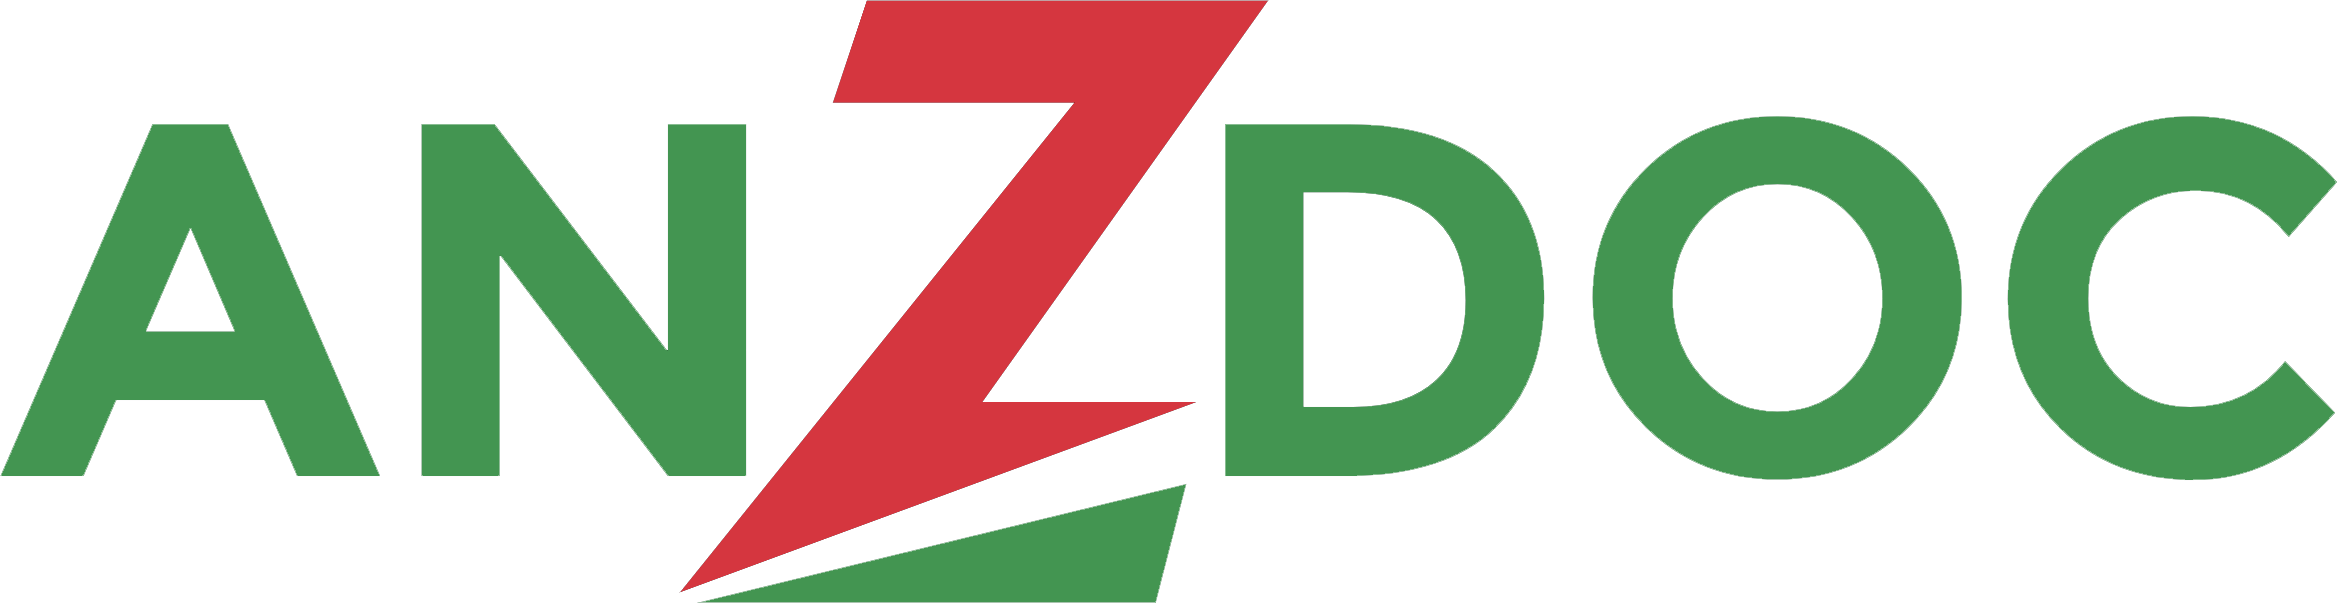 anzdoc logo